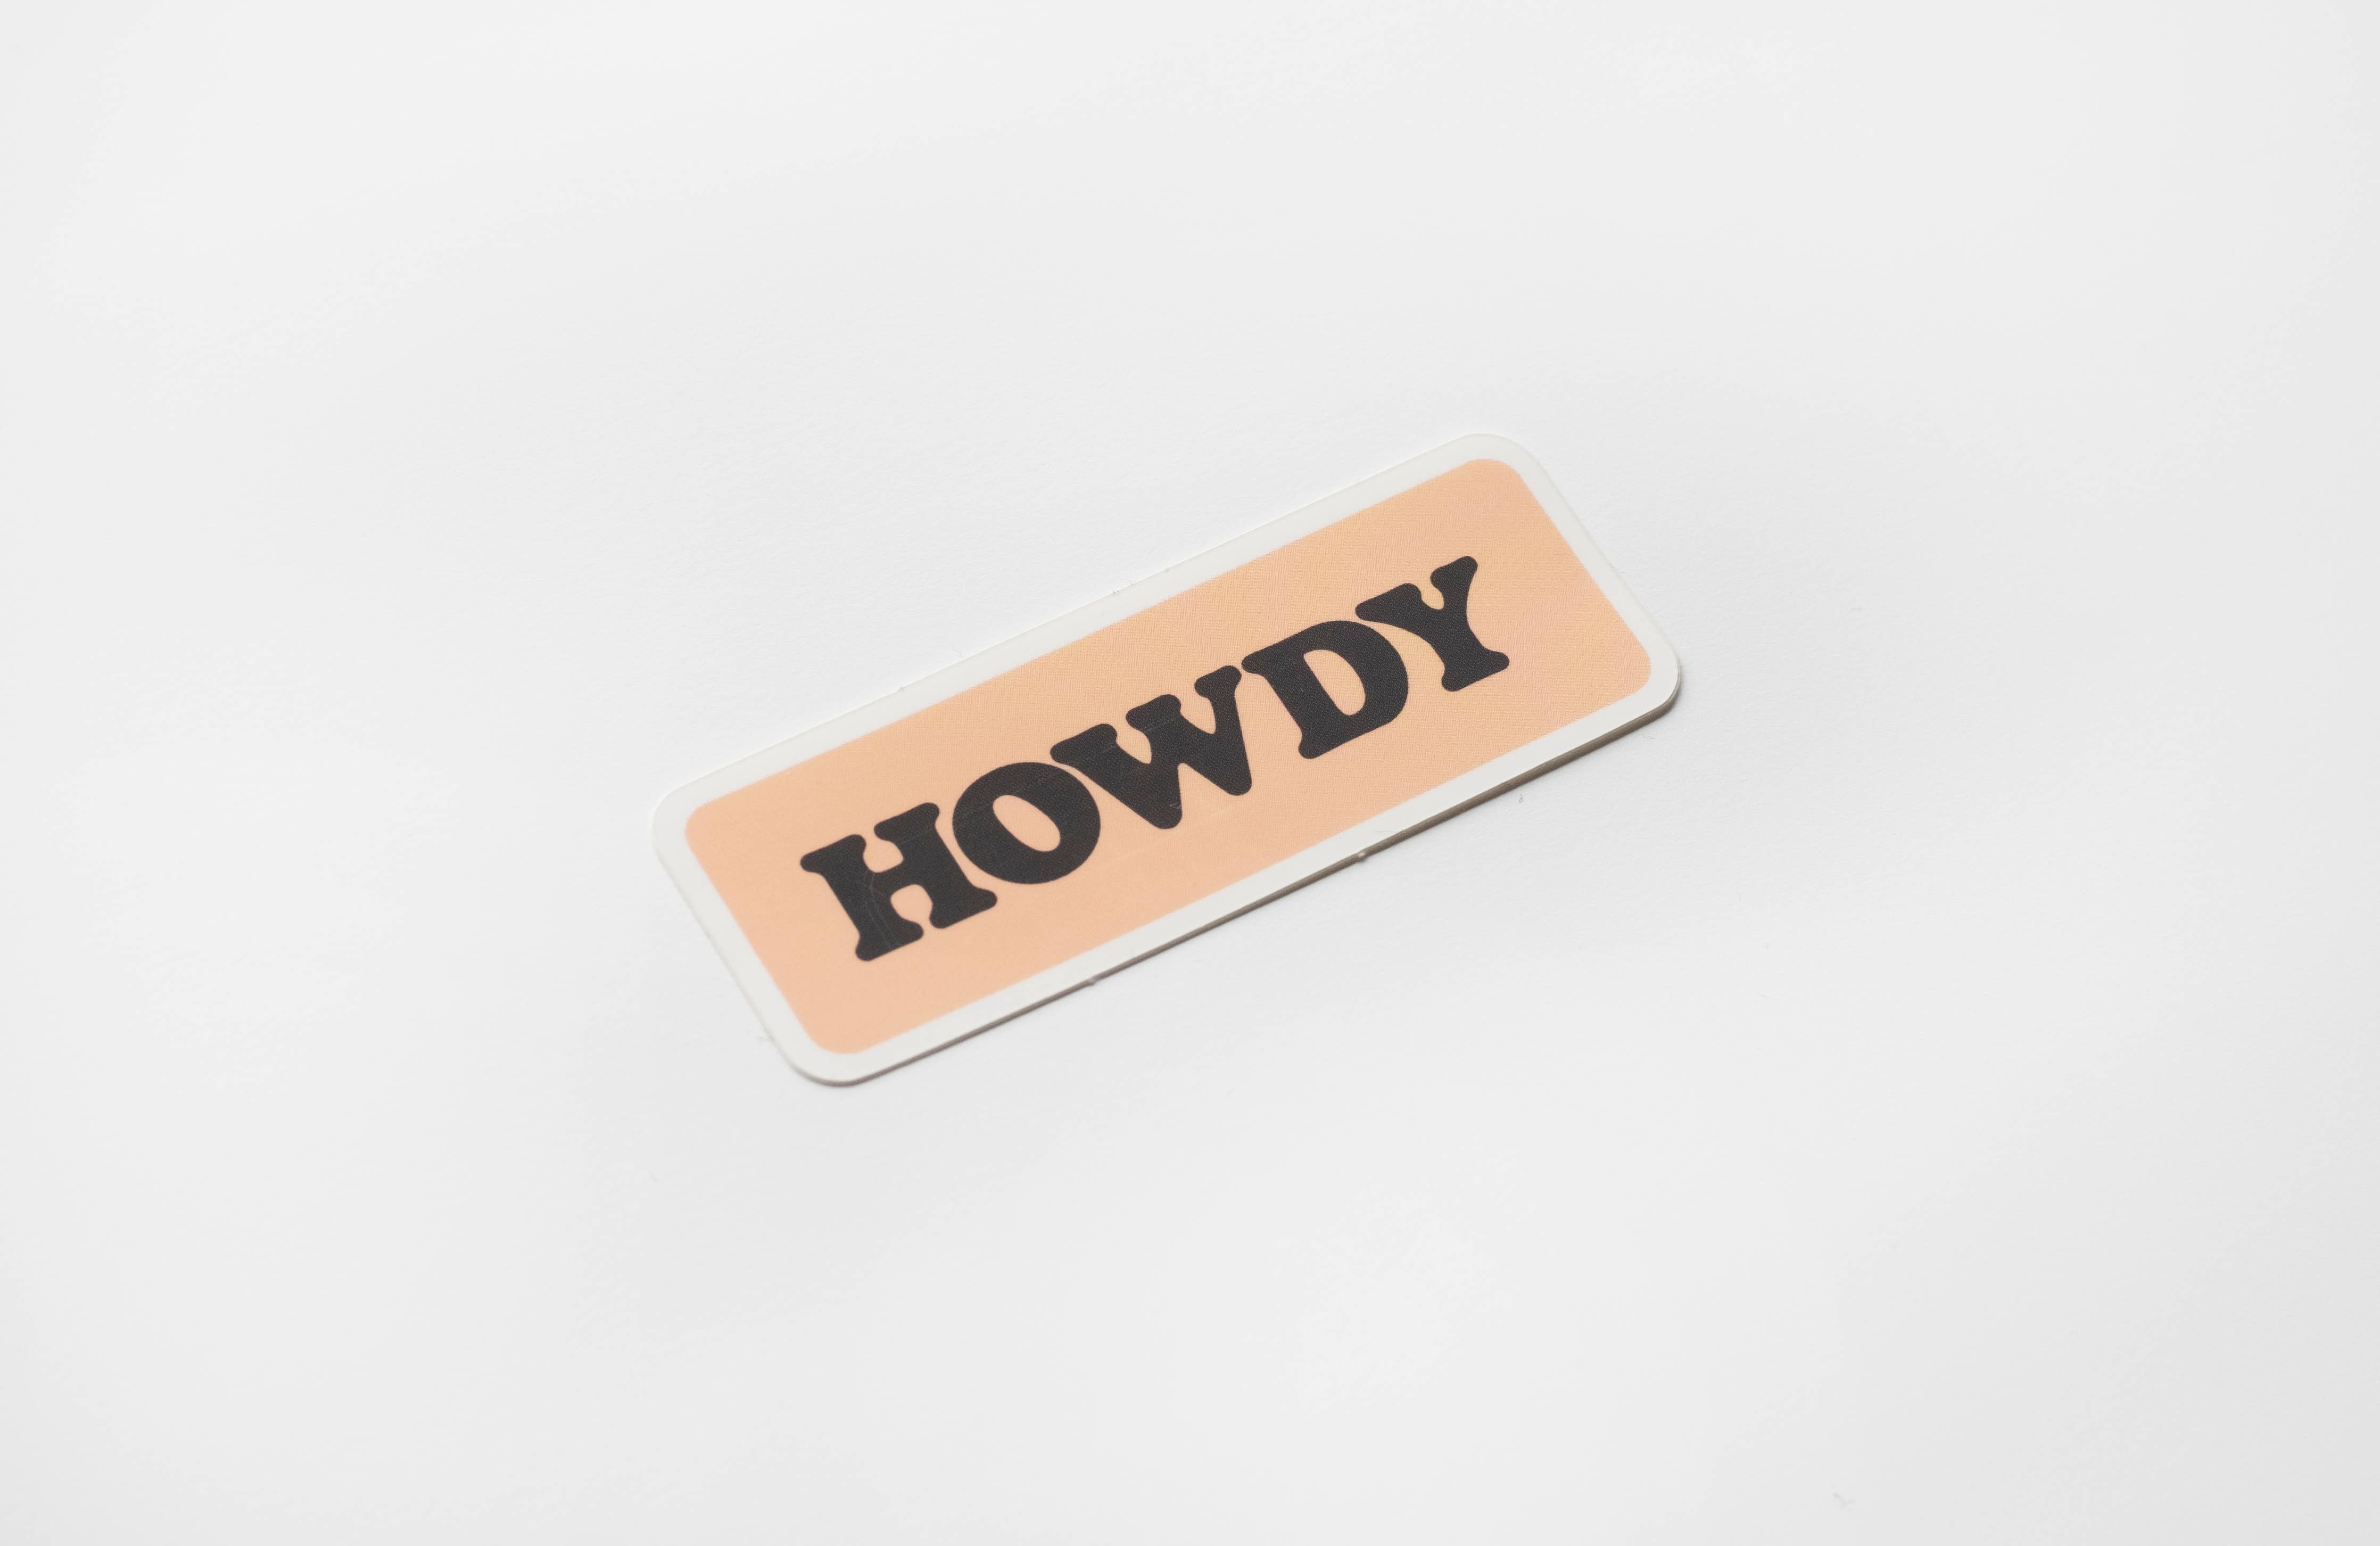 Kulana Stickers - Howdy vinyl sticker